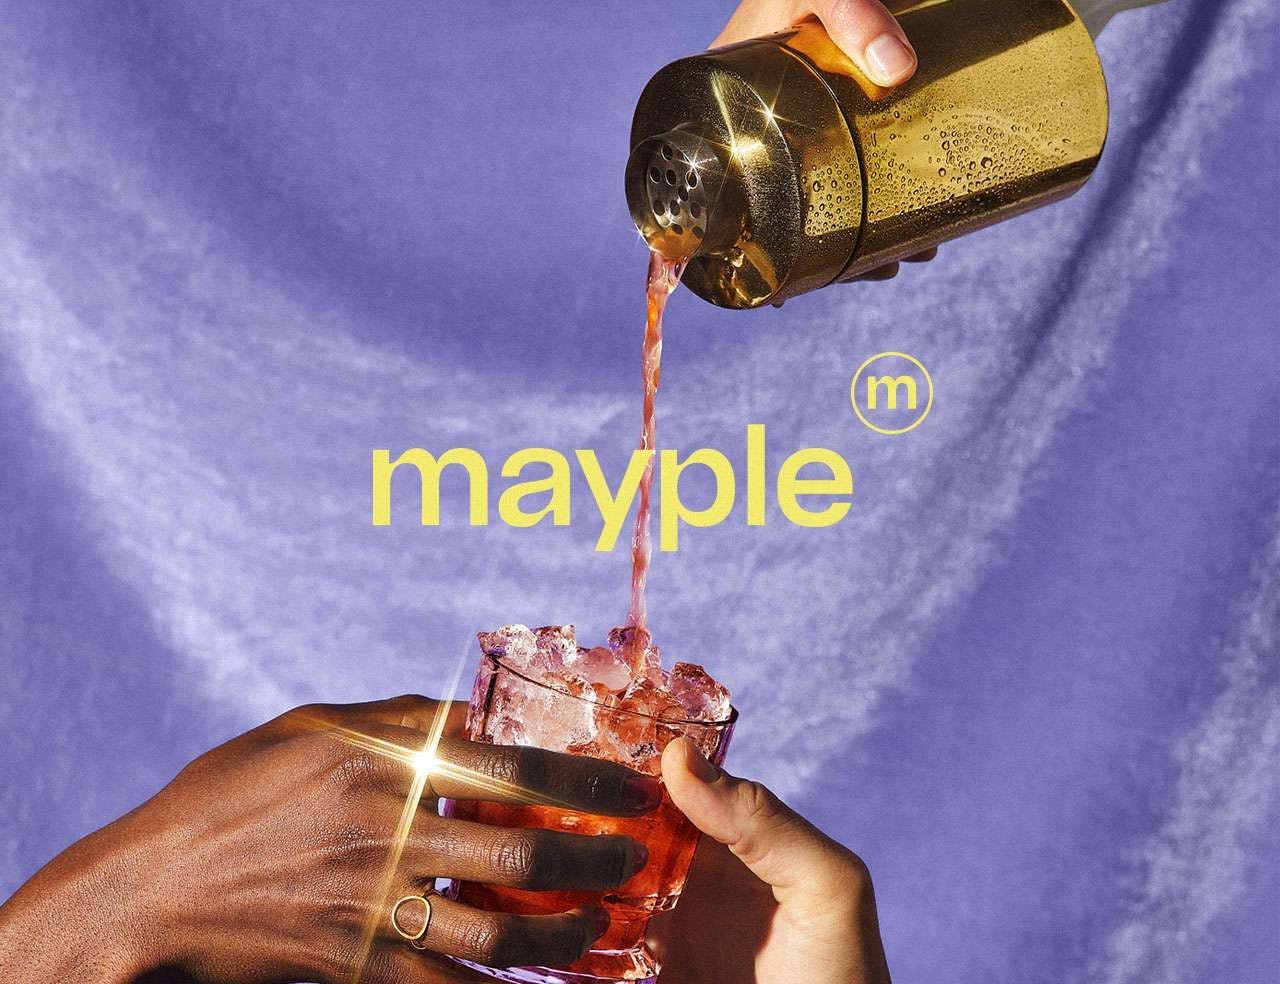 Mayple - Brand Identity, Brand Messaging, Website Design, and Social Media Design